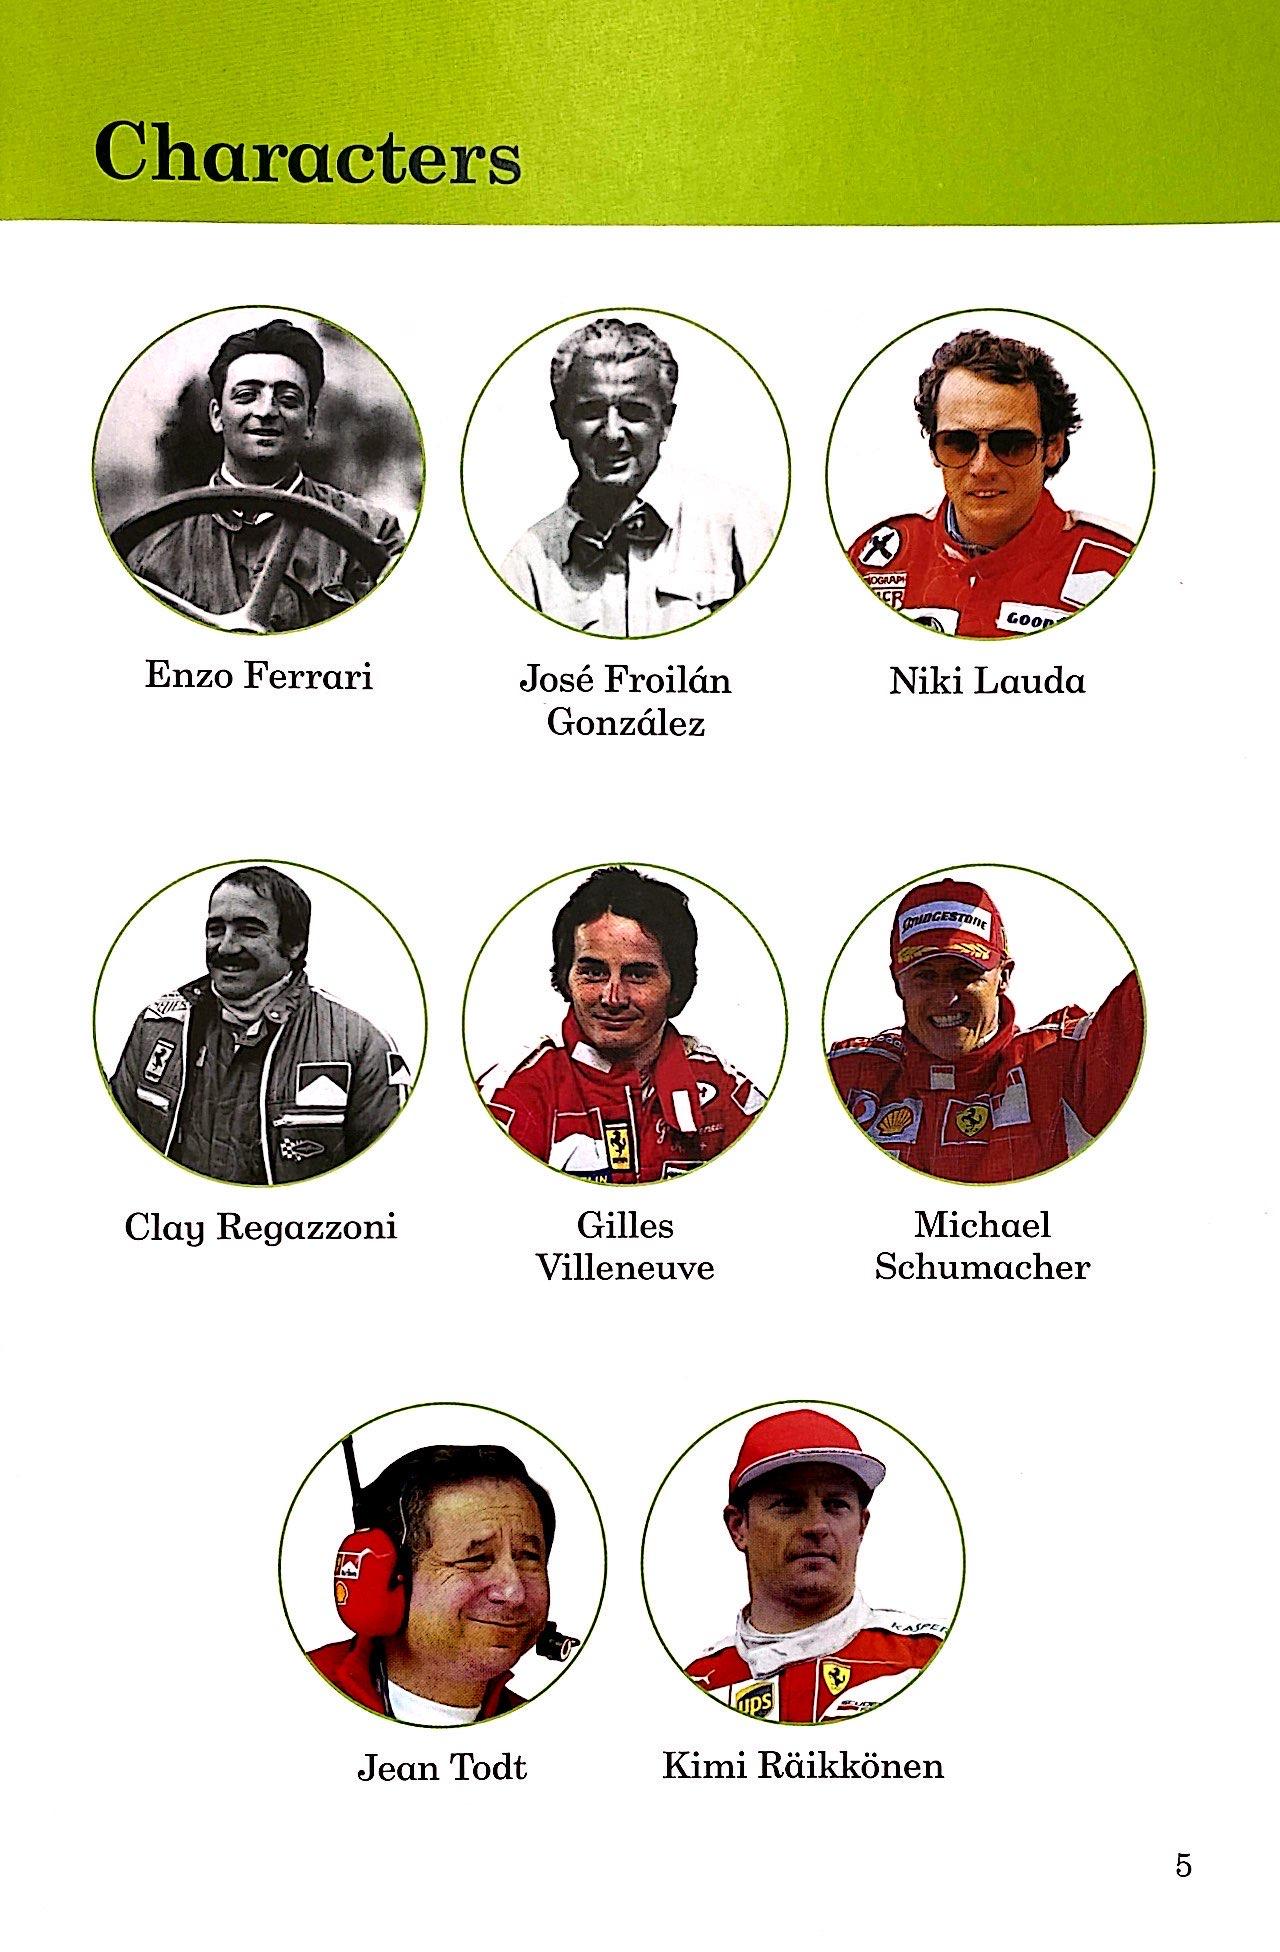 Scuderia Ferrari: Famous Races - Ladybird Readers Level 5